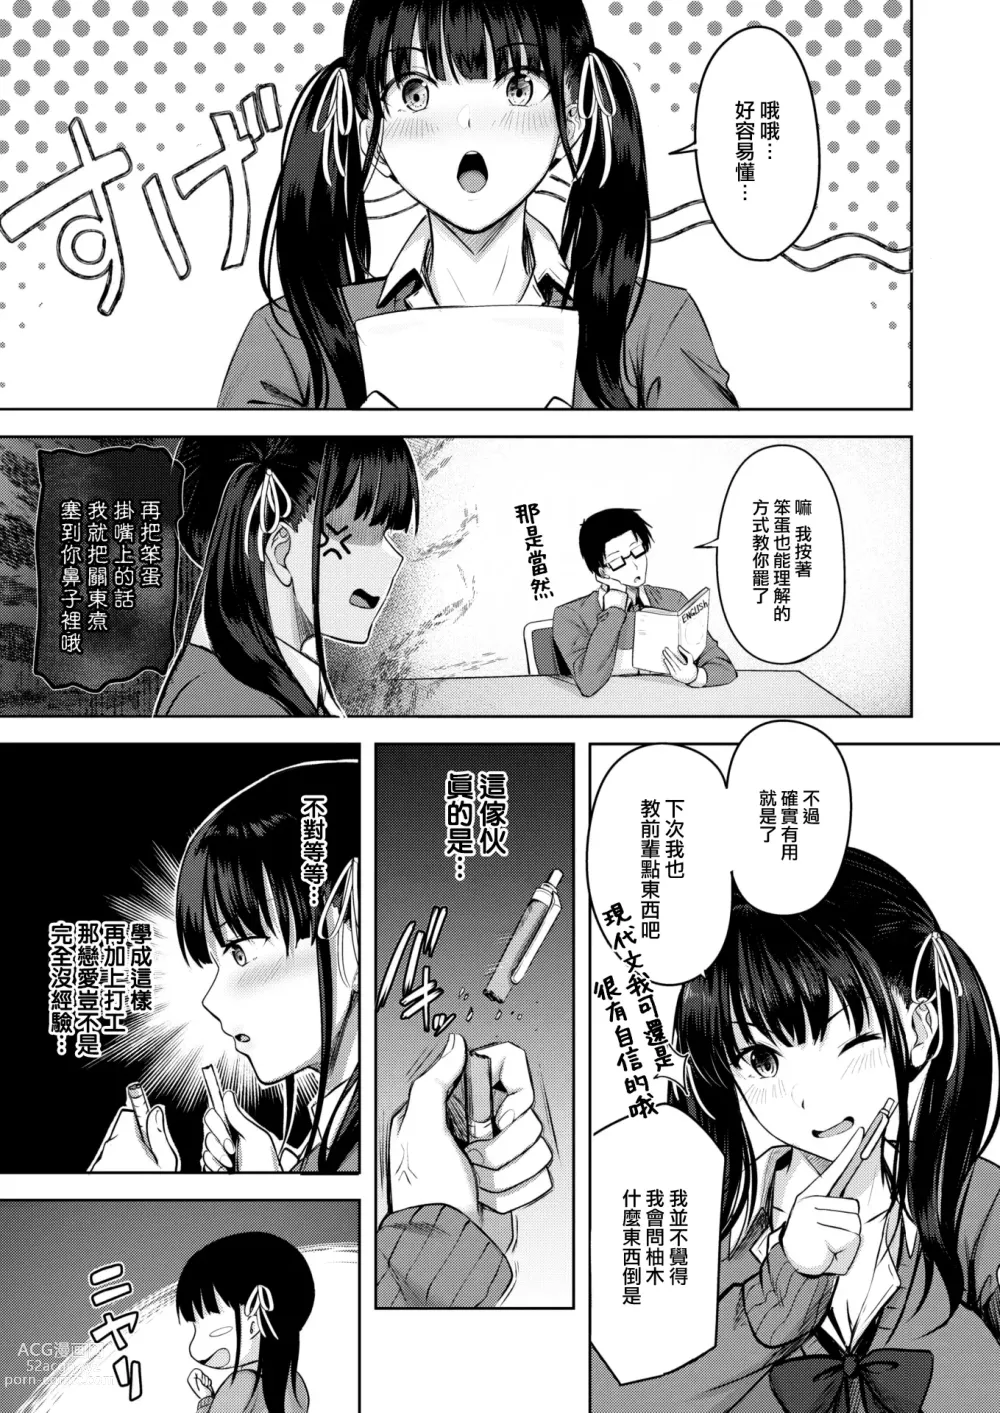 Page 4 of manga Teach me!